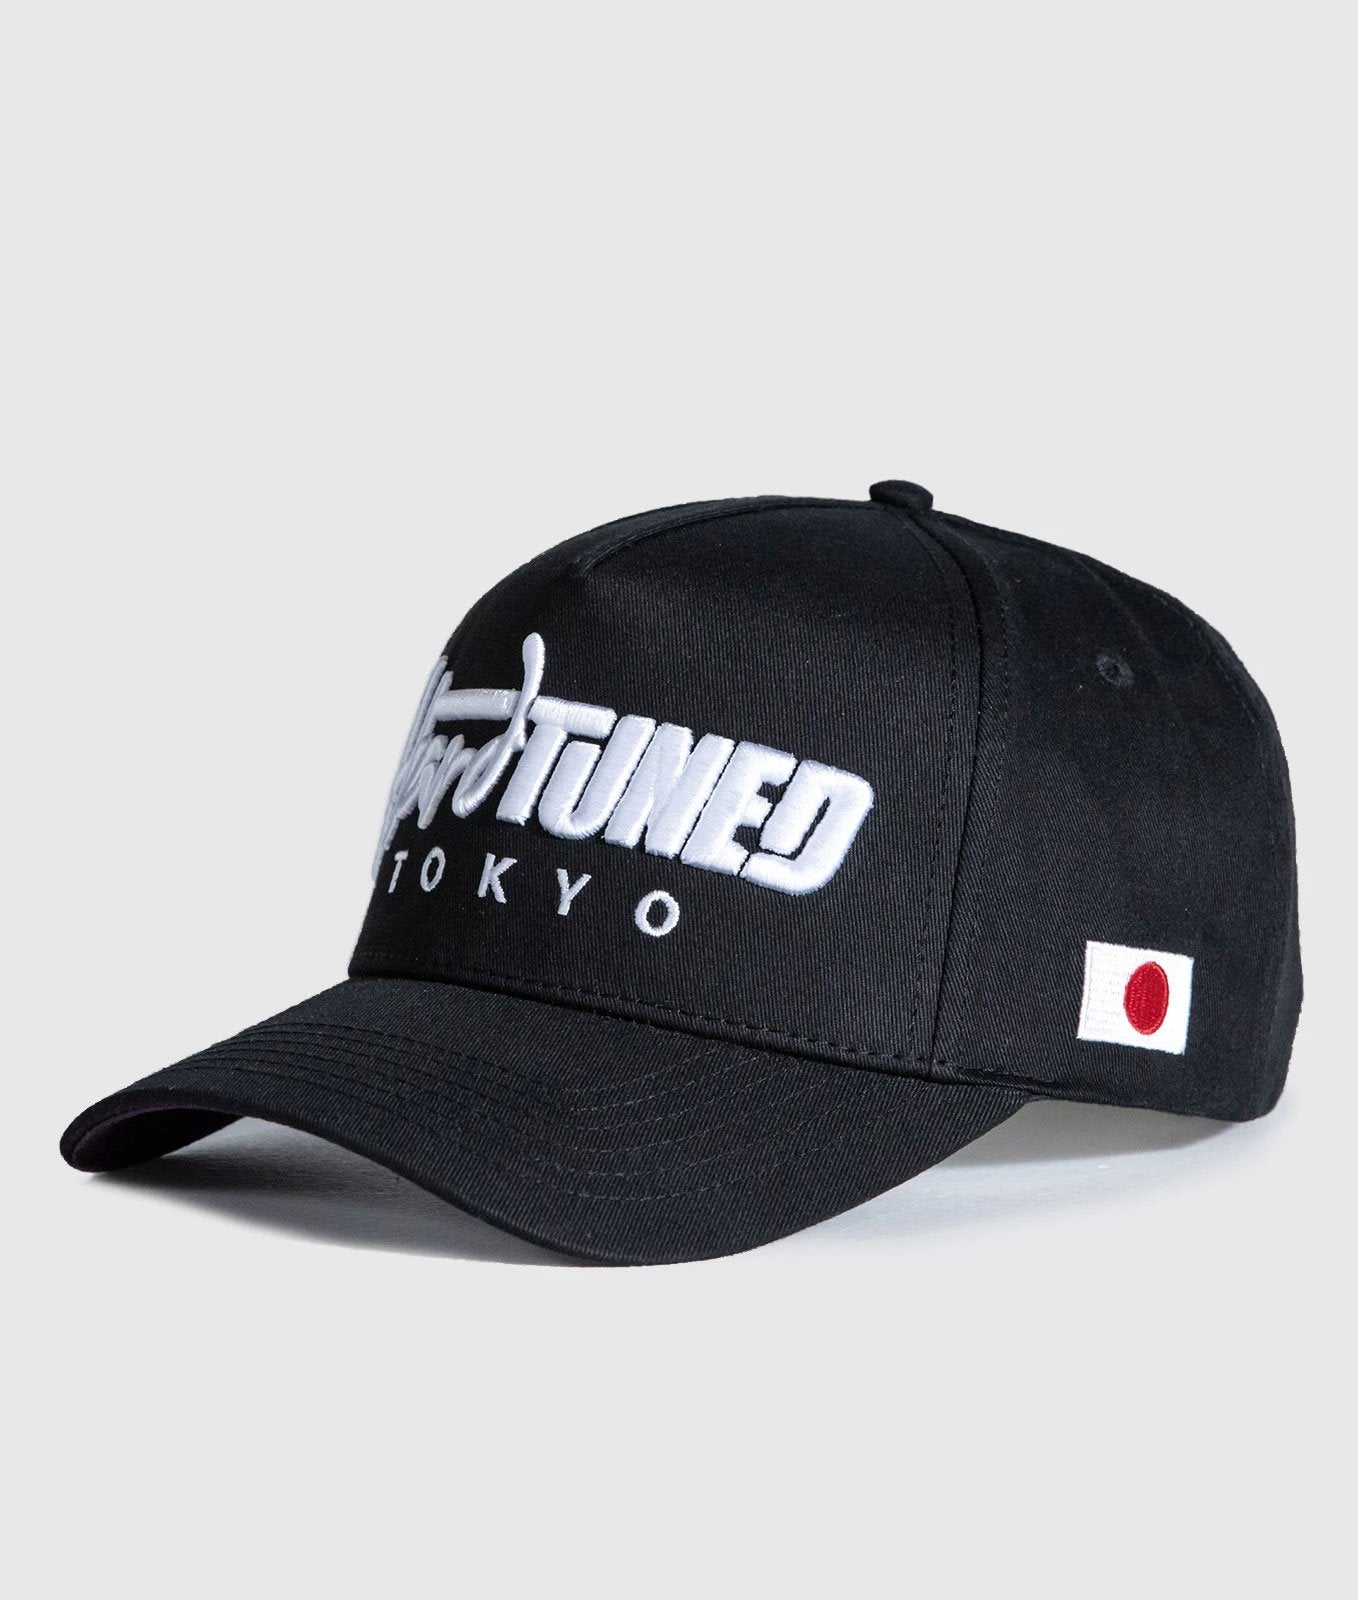 Hardtuned Tokyo Black A-Frame Cap